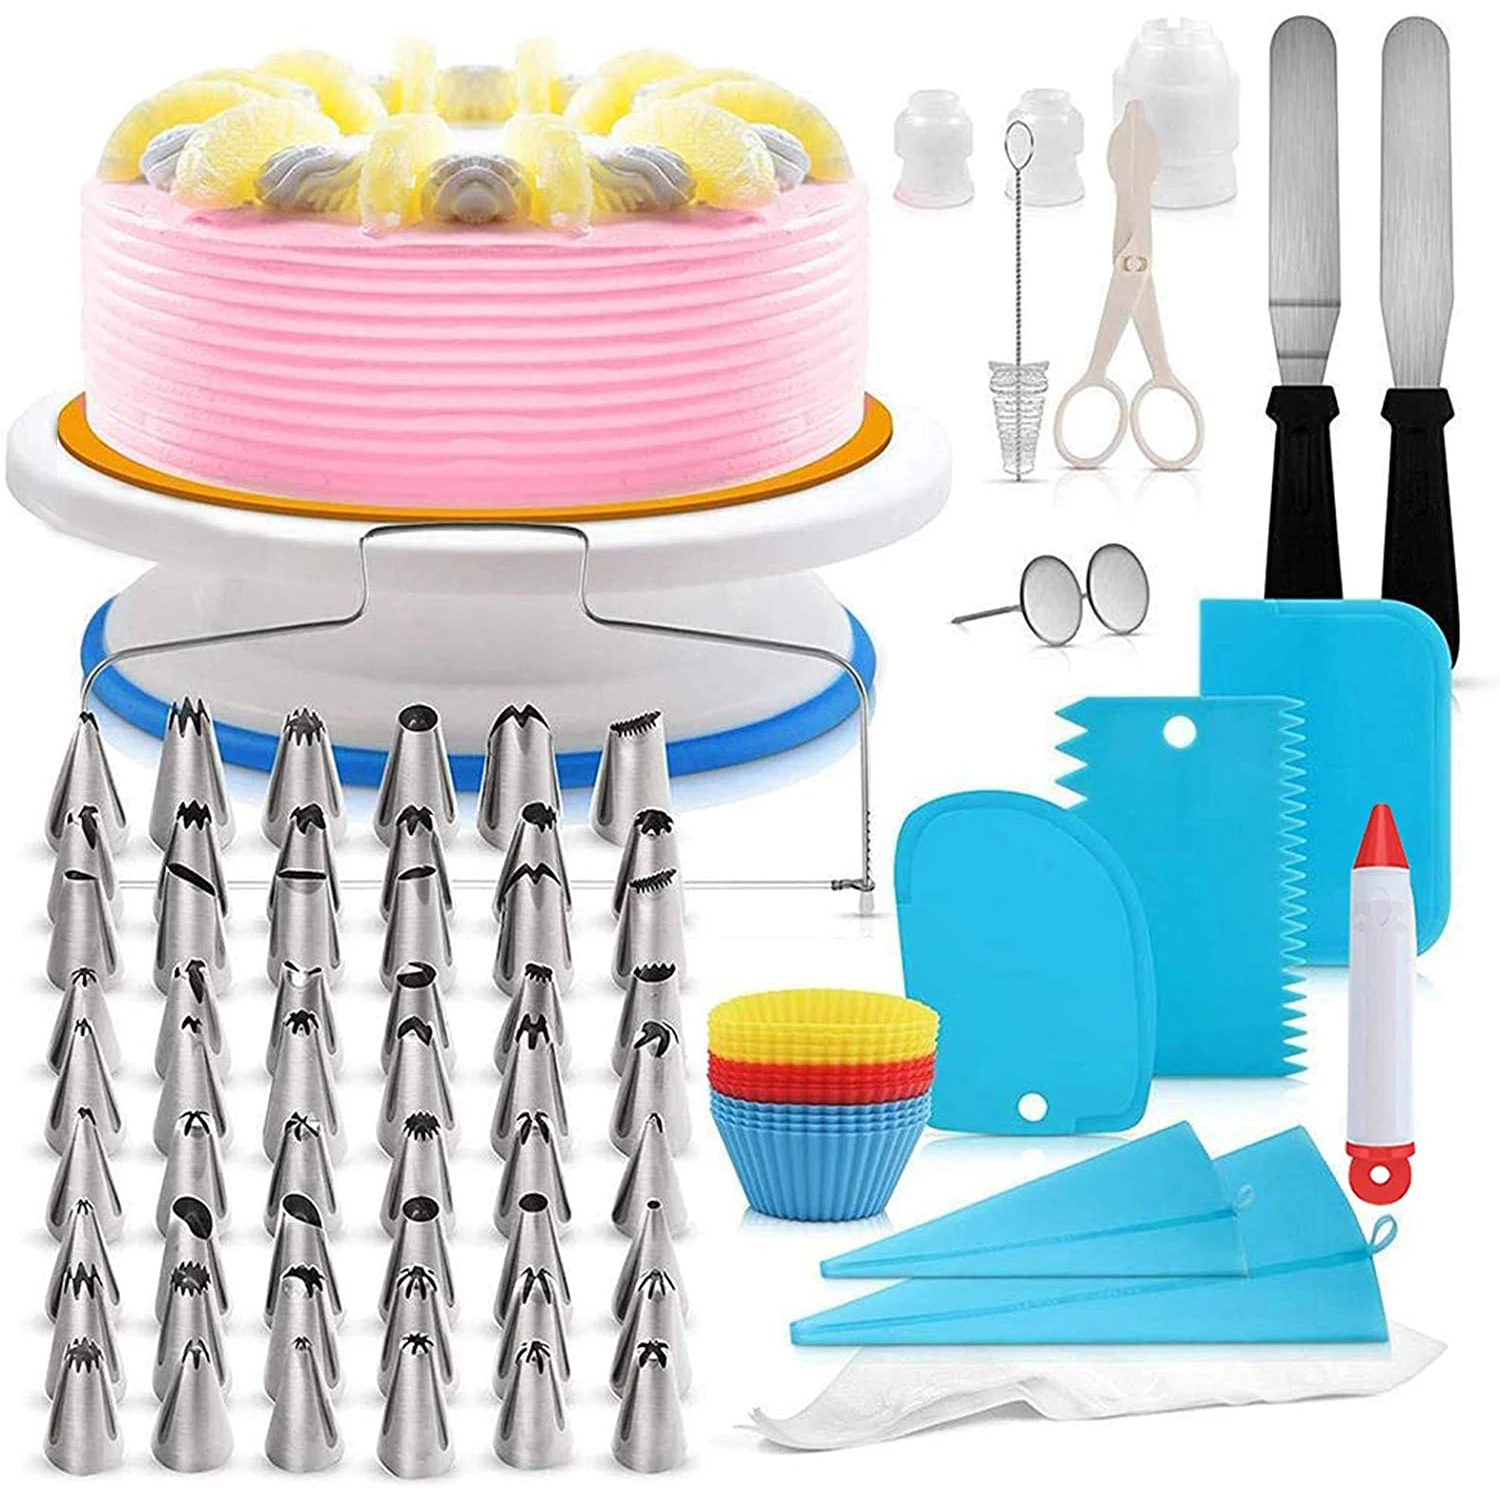 Home Kitchen Cake Baking Tools Set Decorating Supplies Kit DIY Accessories